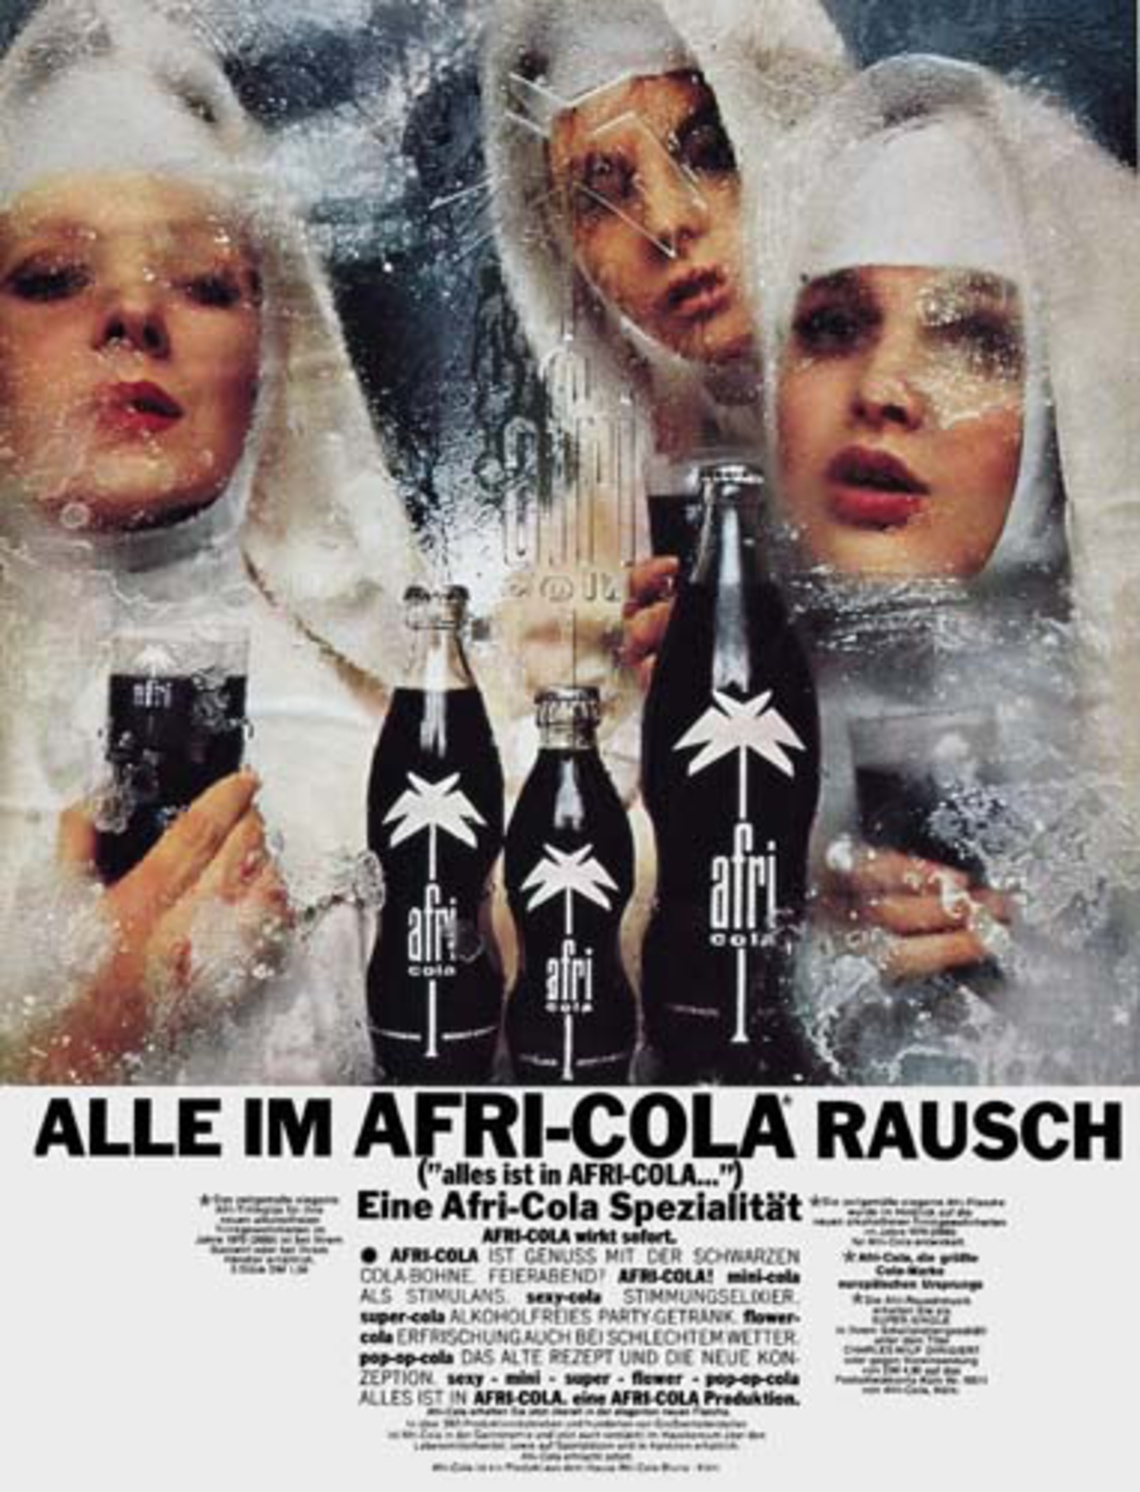 View: Afri-Cola Ad, By Charles Wilp Design Duesseldorf